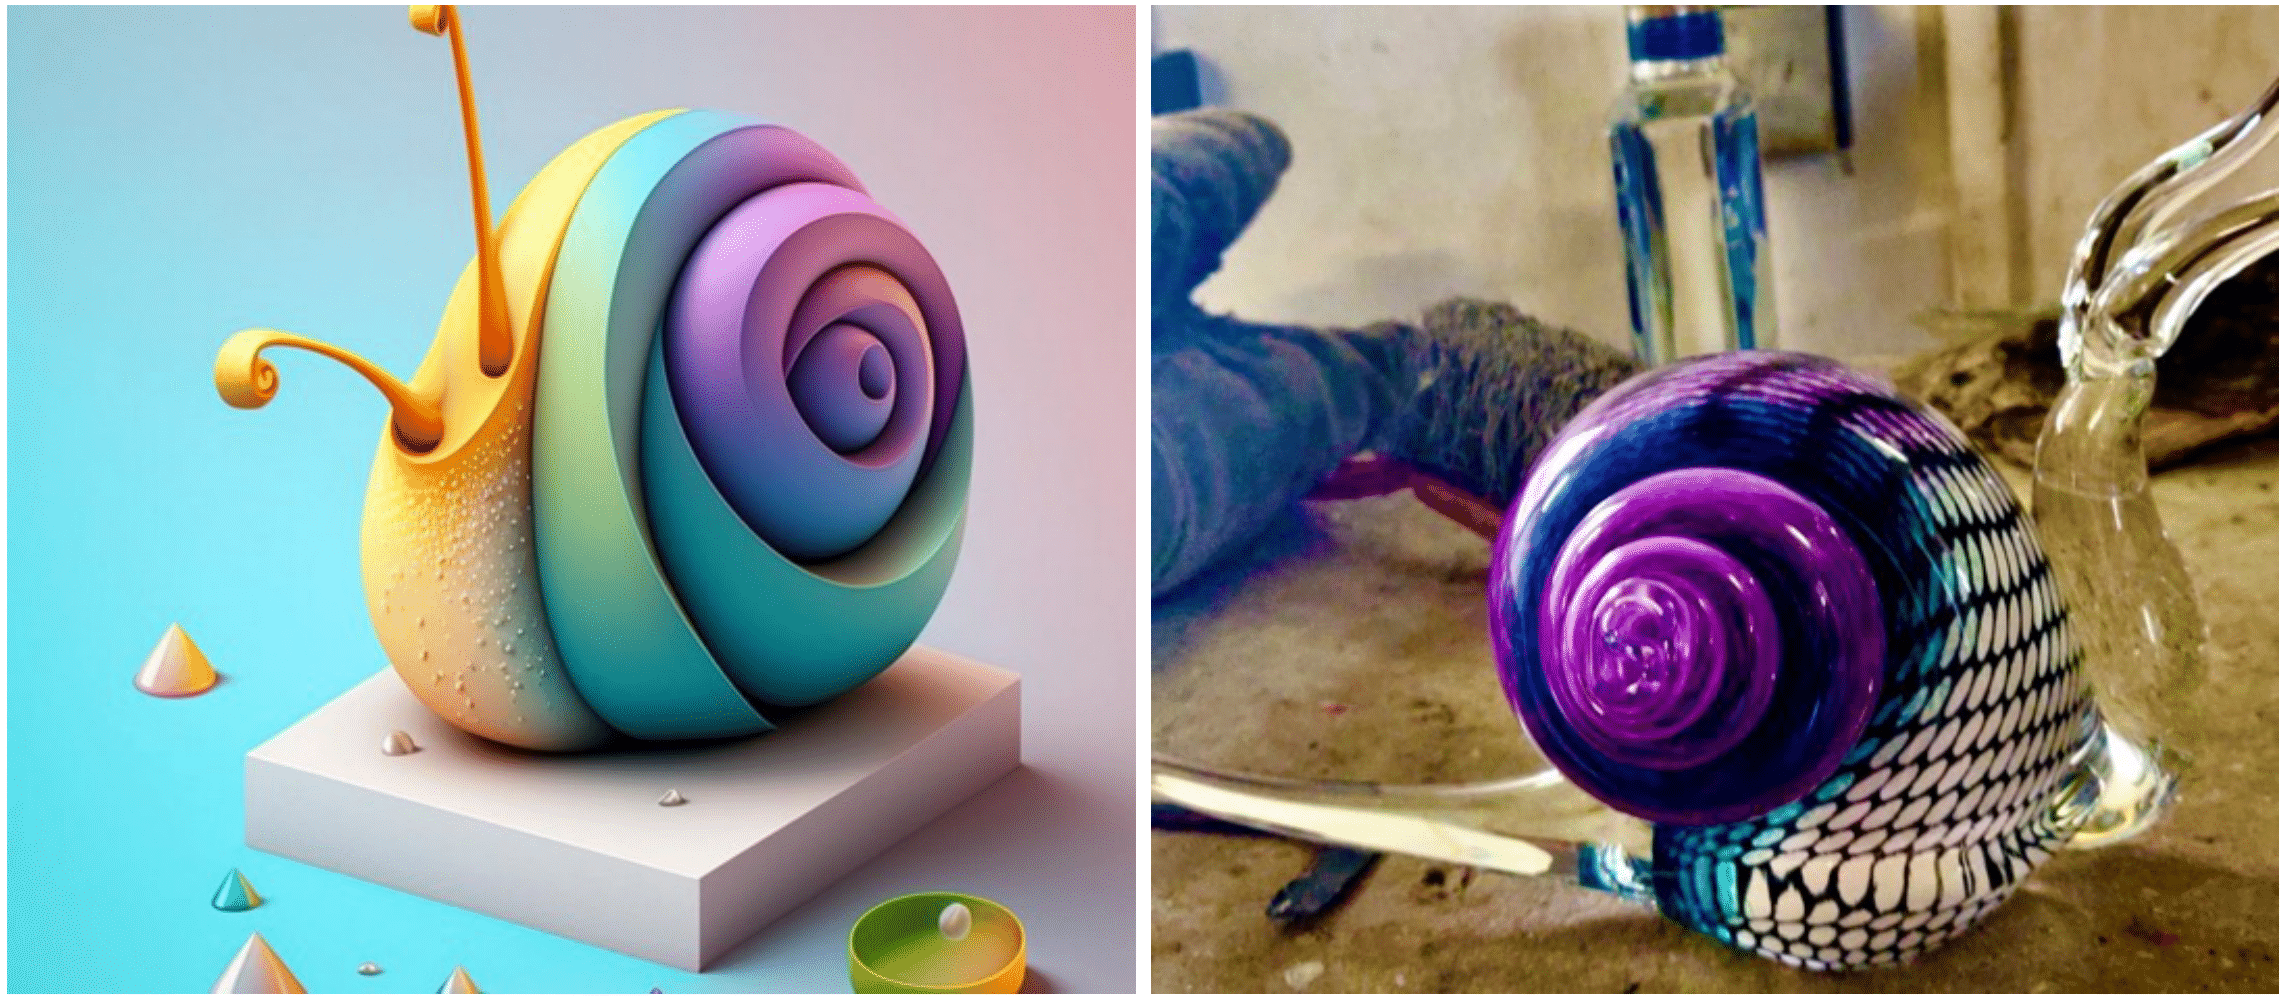 Svaja's handmade Sydney Snail versus an AI generated version of a snail